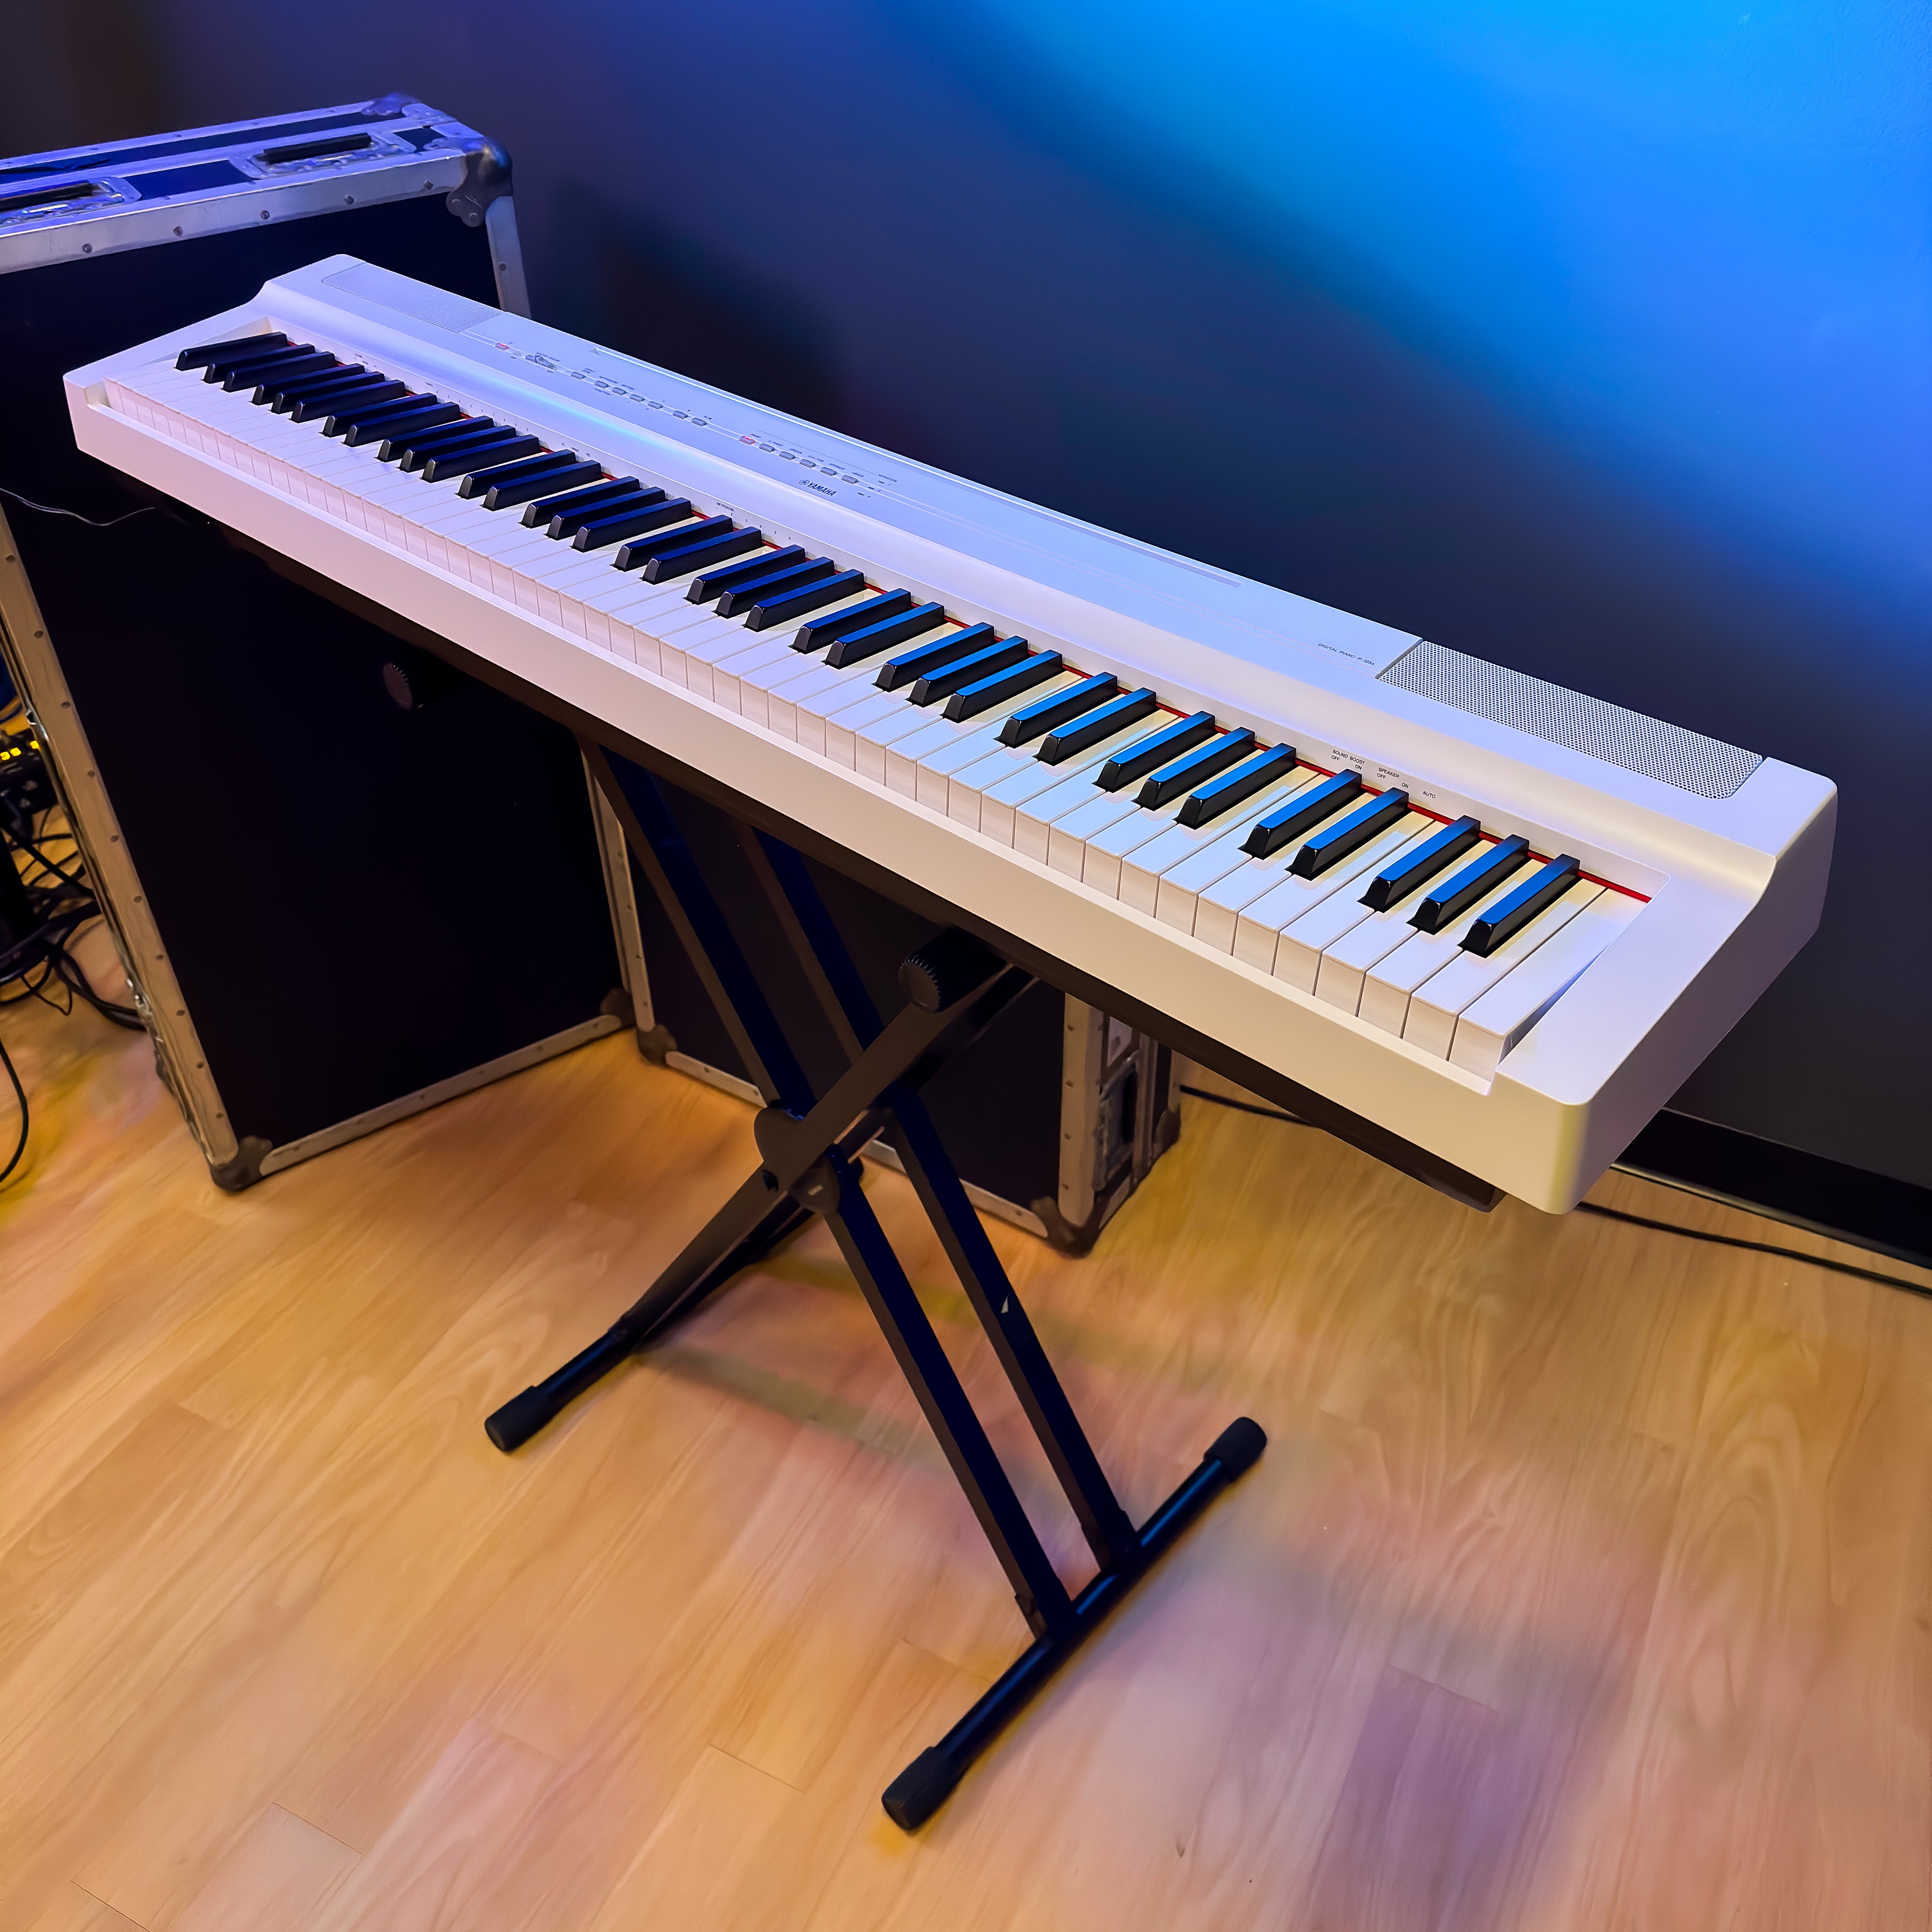 Yamaha P-125a Digital Piano - White - View 6